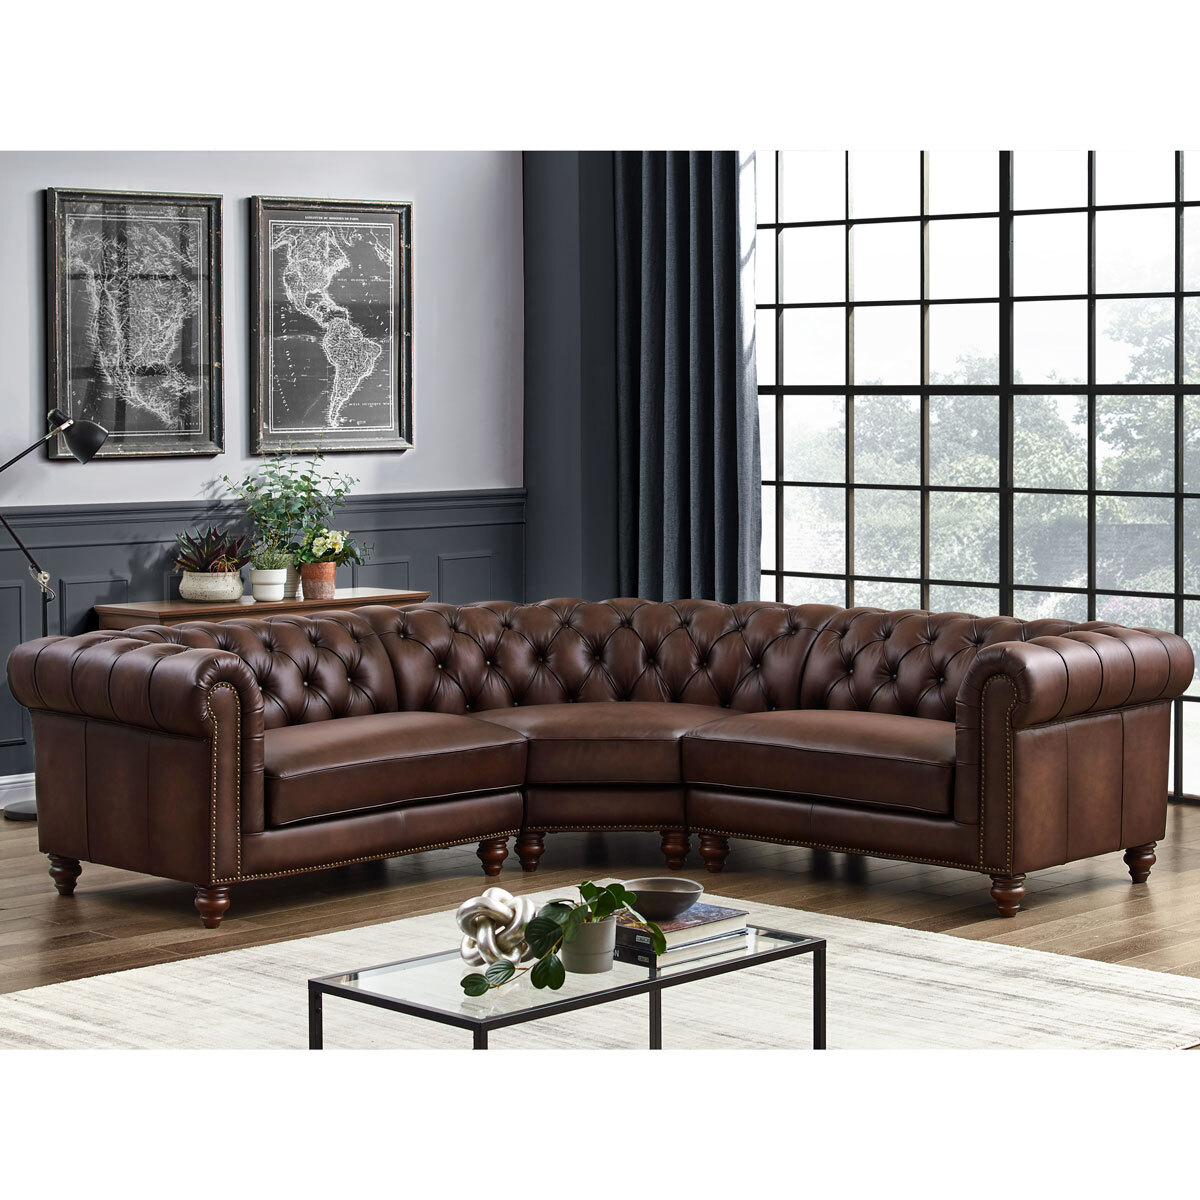 Allington Brown Leather Chesterfield Corner Sofa | Costco UK